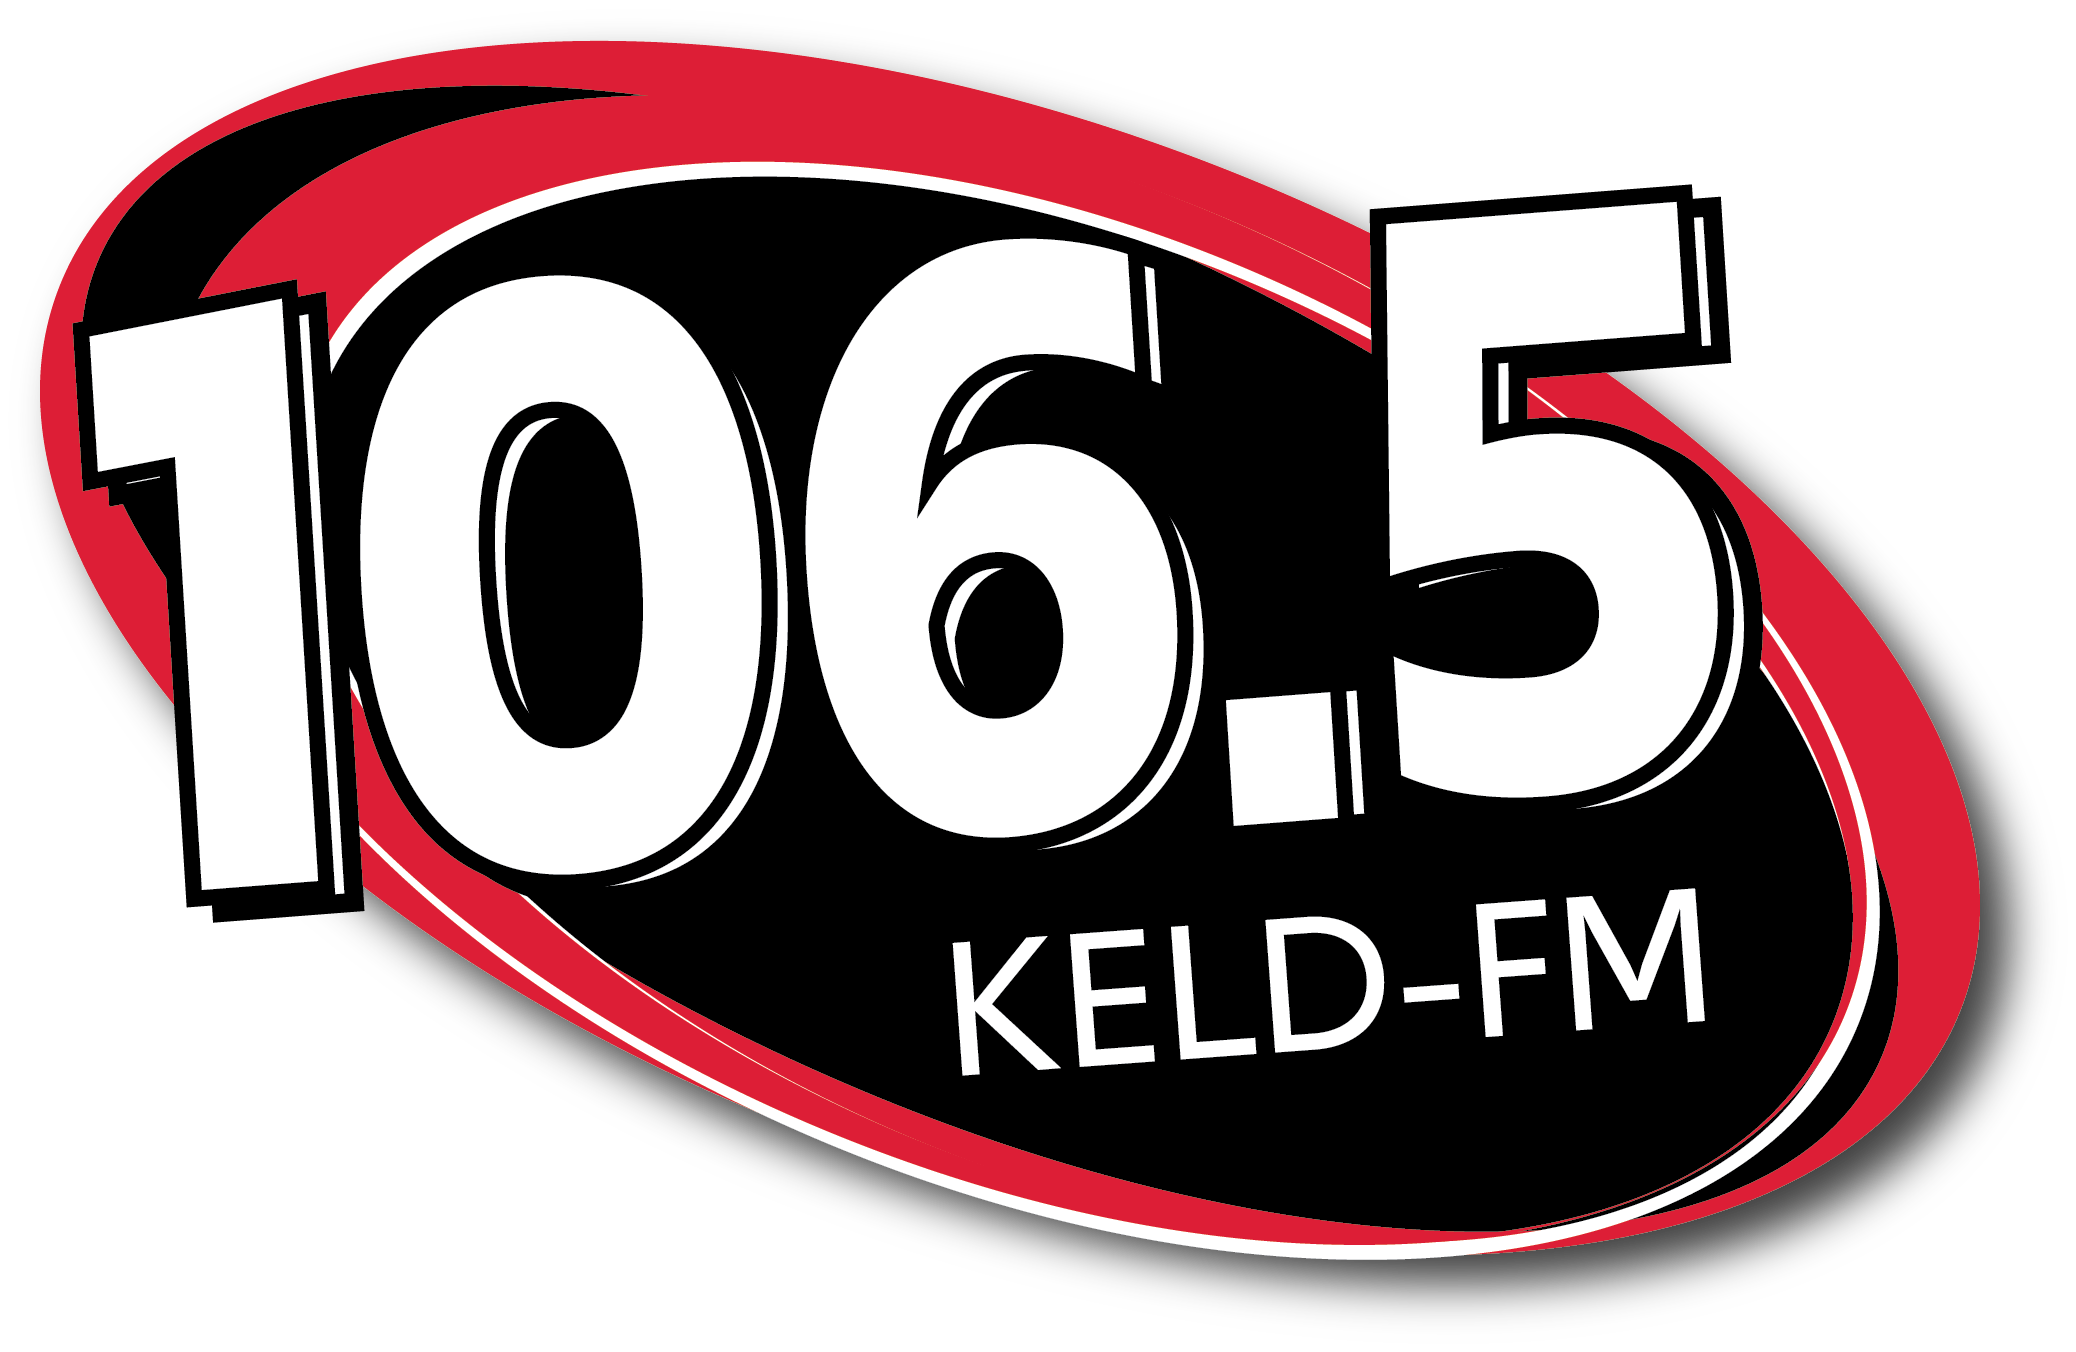 1065_KELD-FM.png